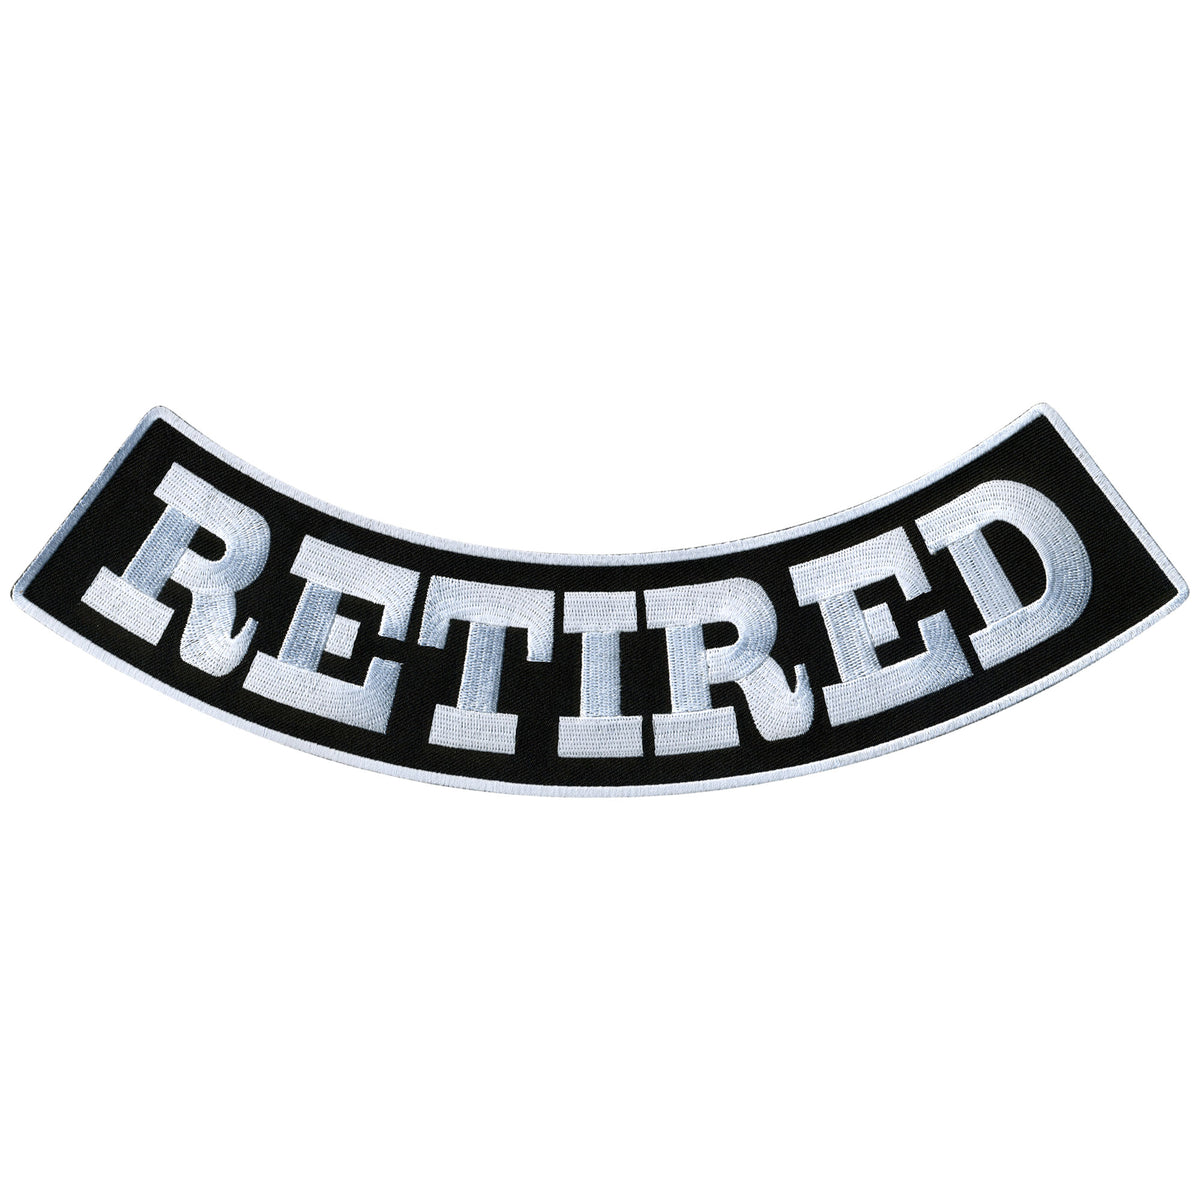 Hot Leathers Retired 12” X 3” Bottom Rocker Patch